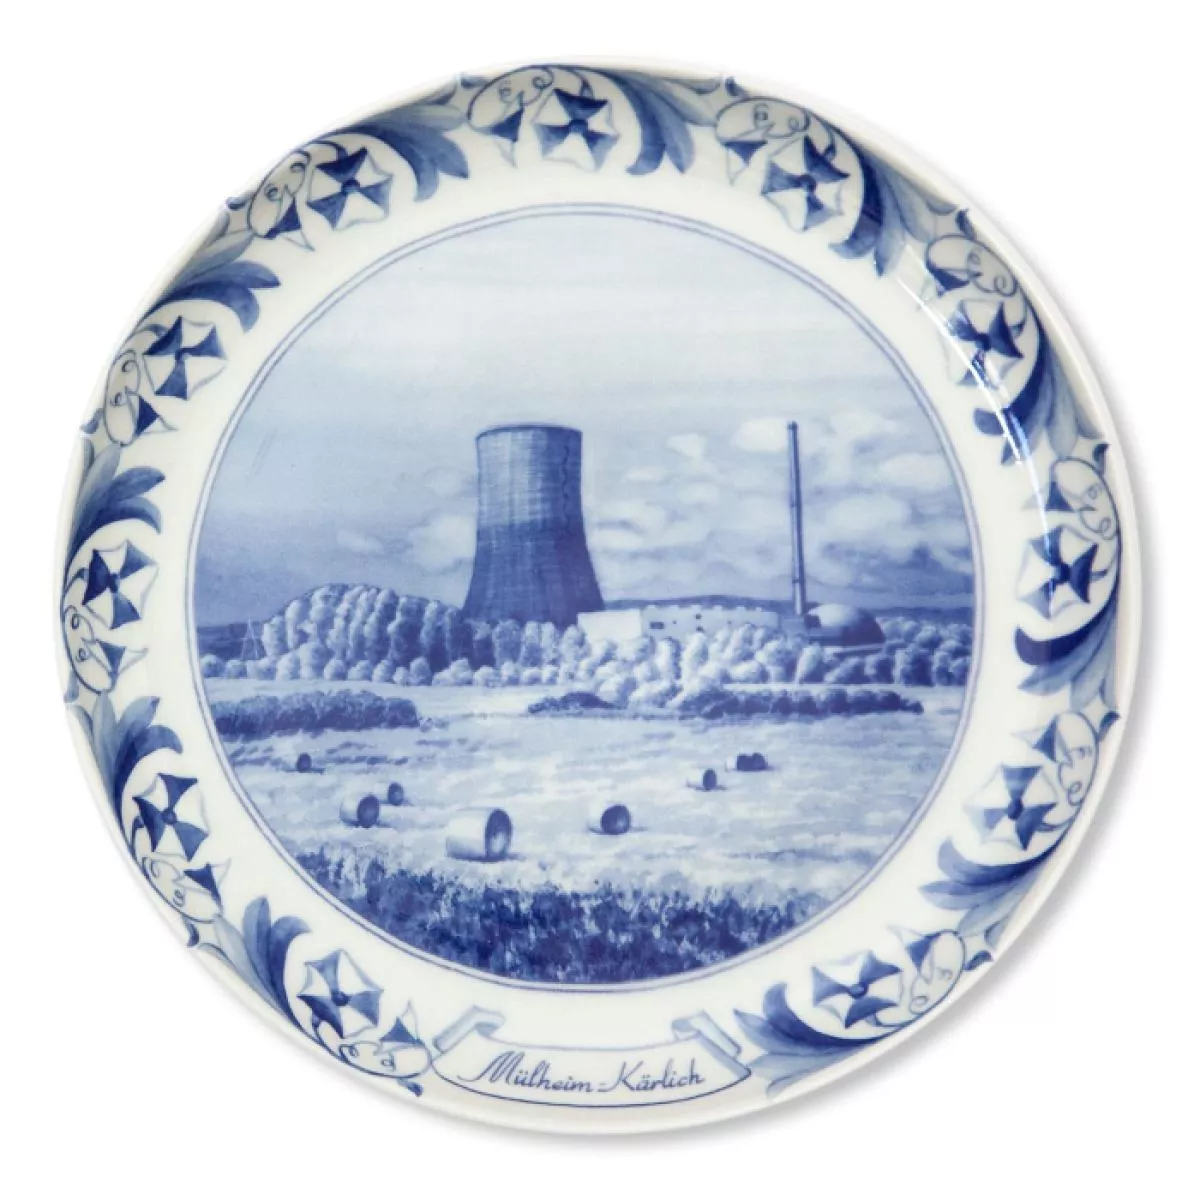 Nuclear Plate Mülheim-Kärlich made of porcelain | Kunstbaron